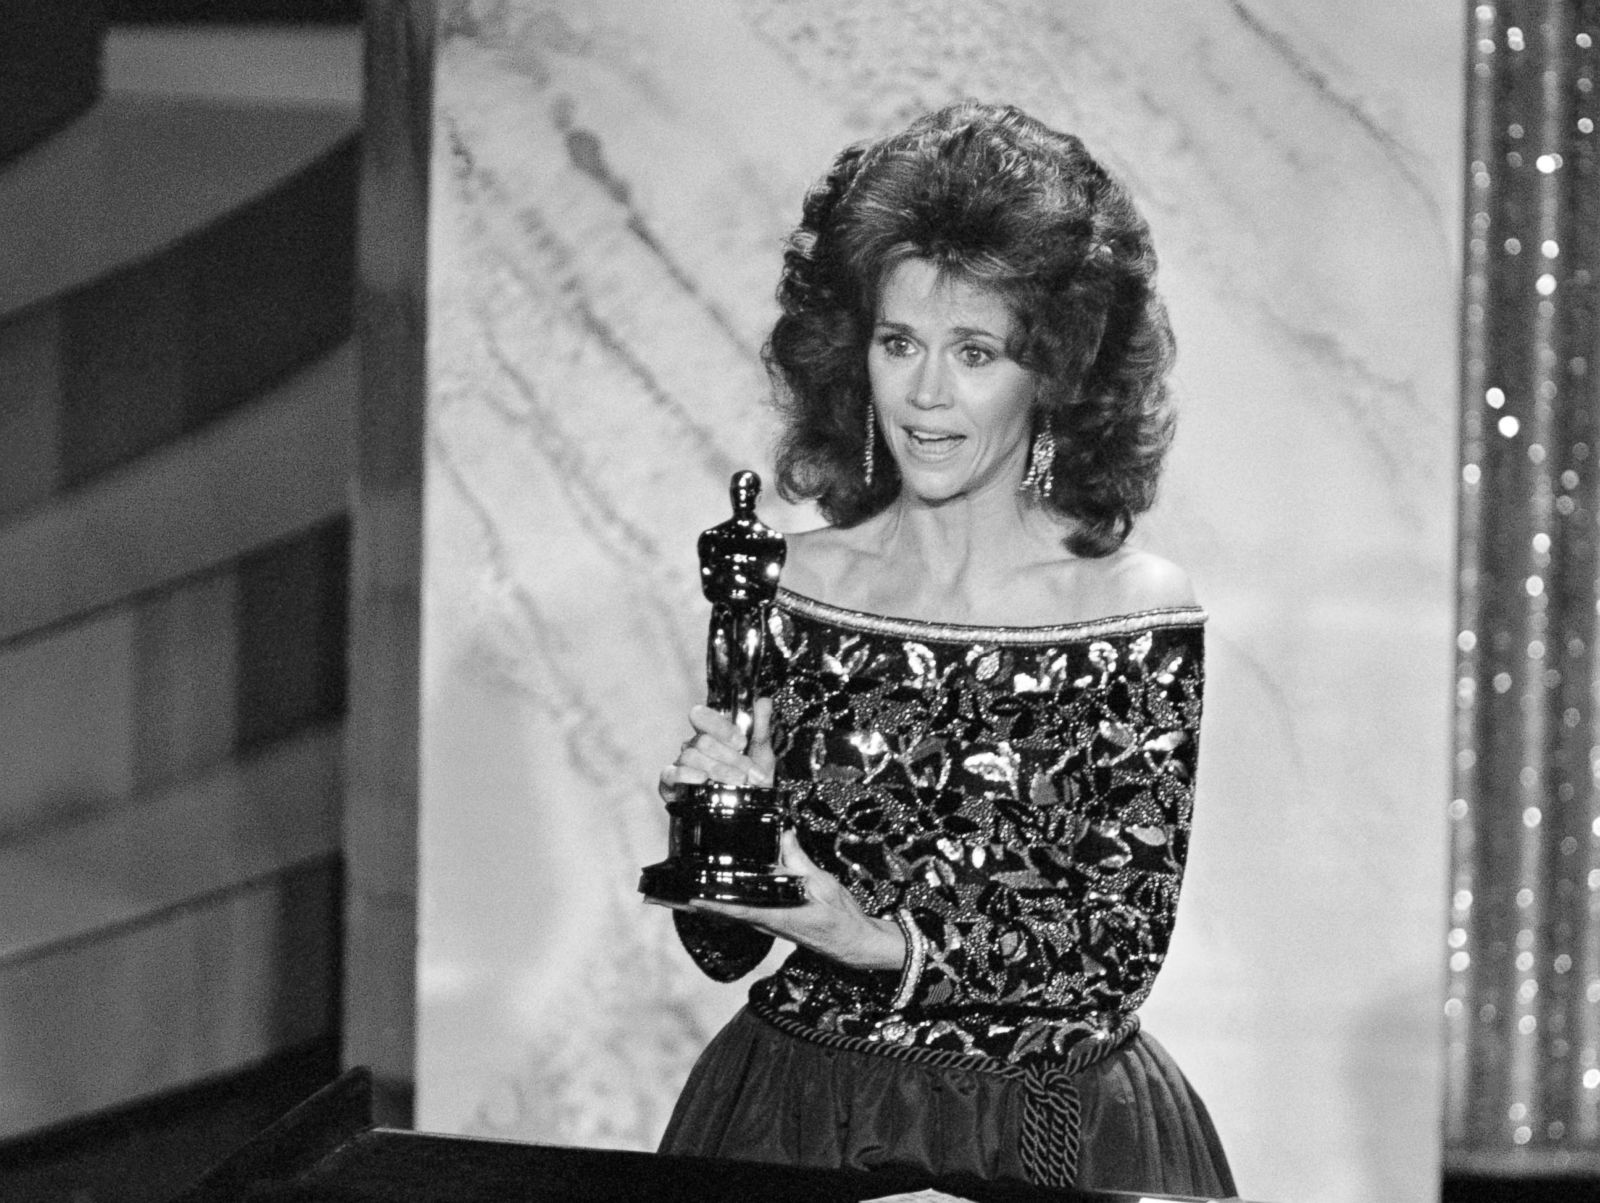 Jane Fonda Age American Actress Jane Fonda Says She Has No Time For